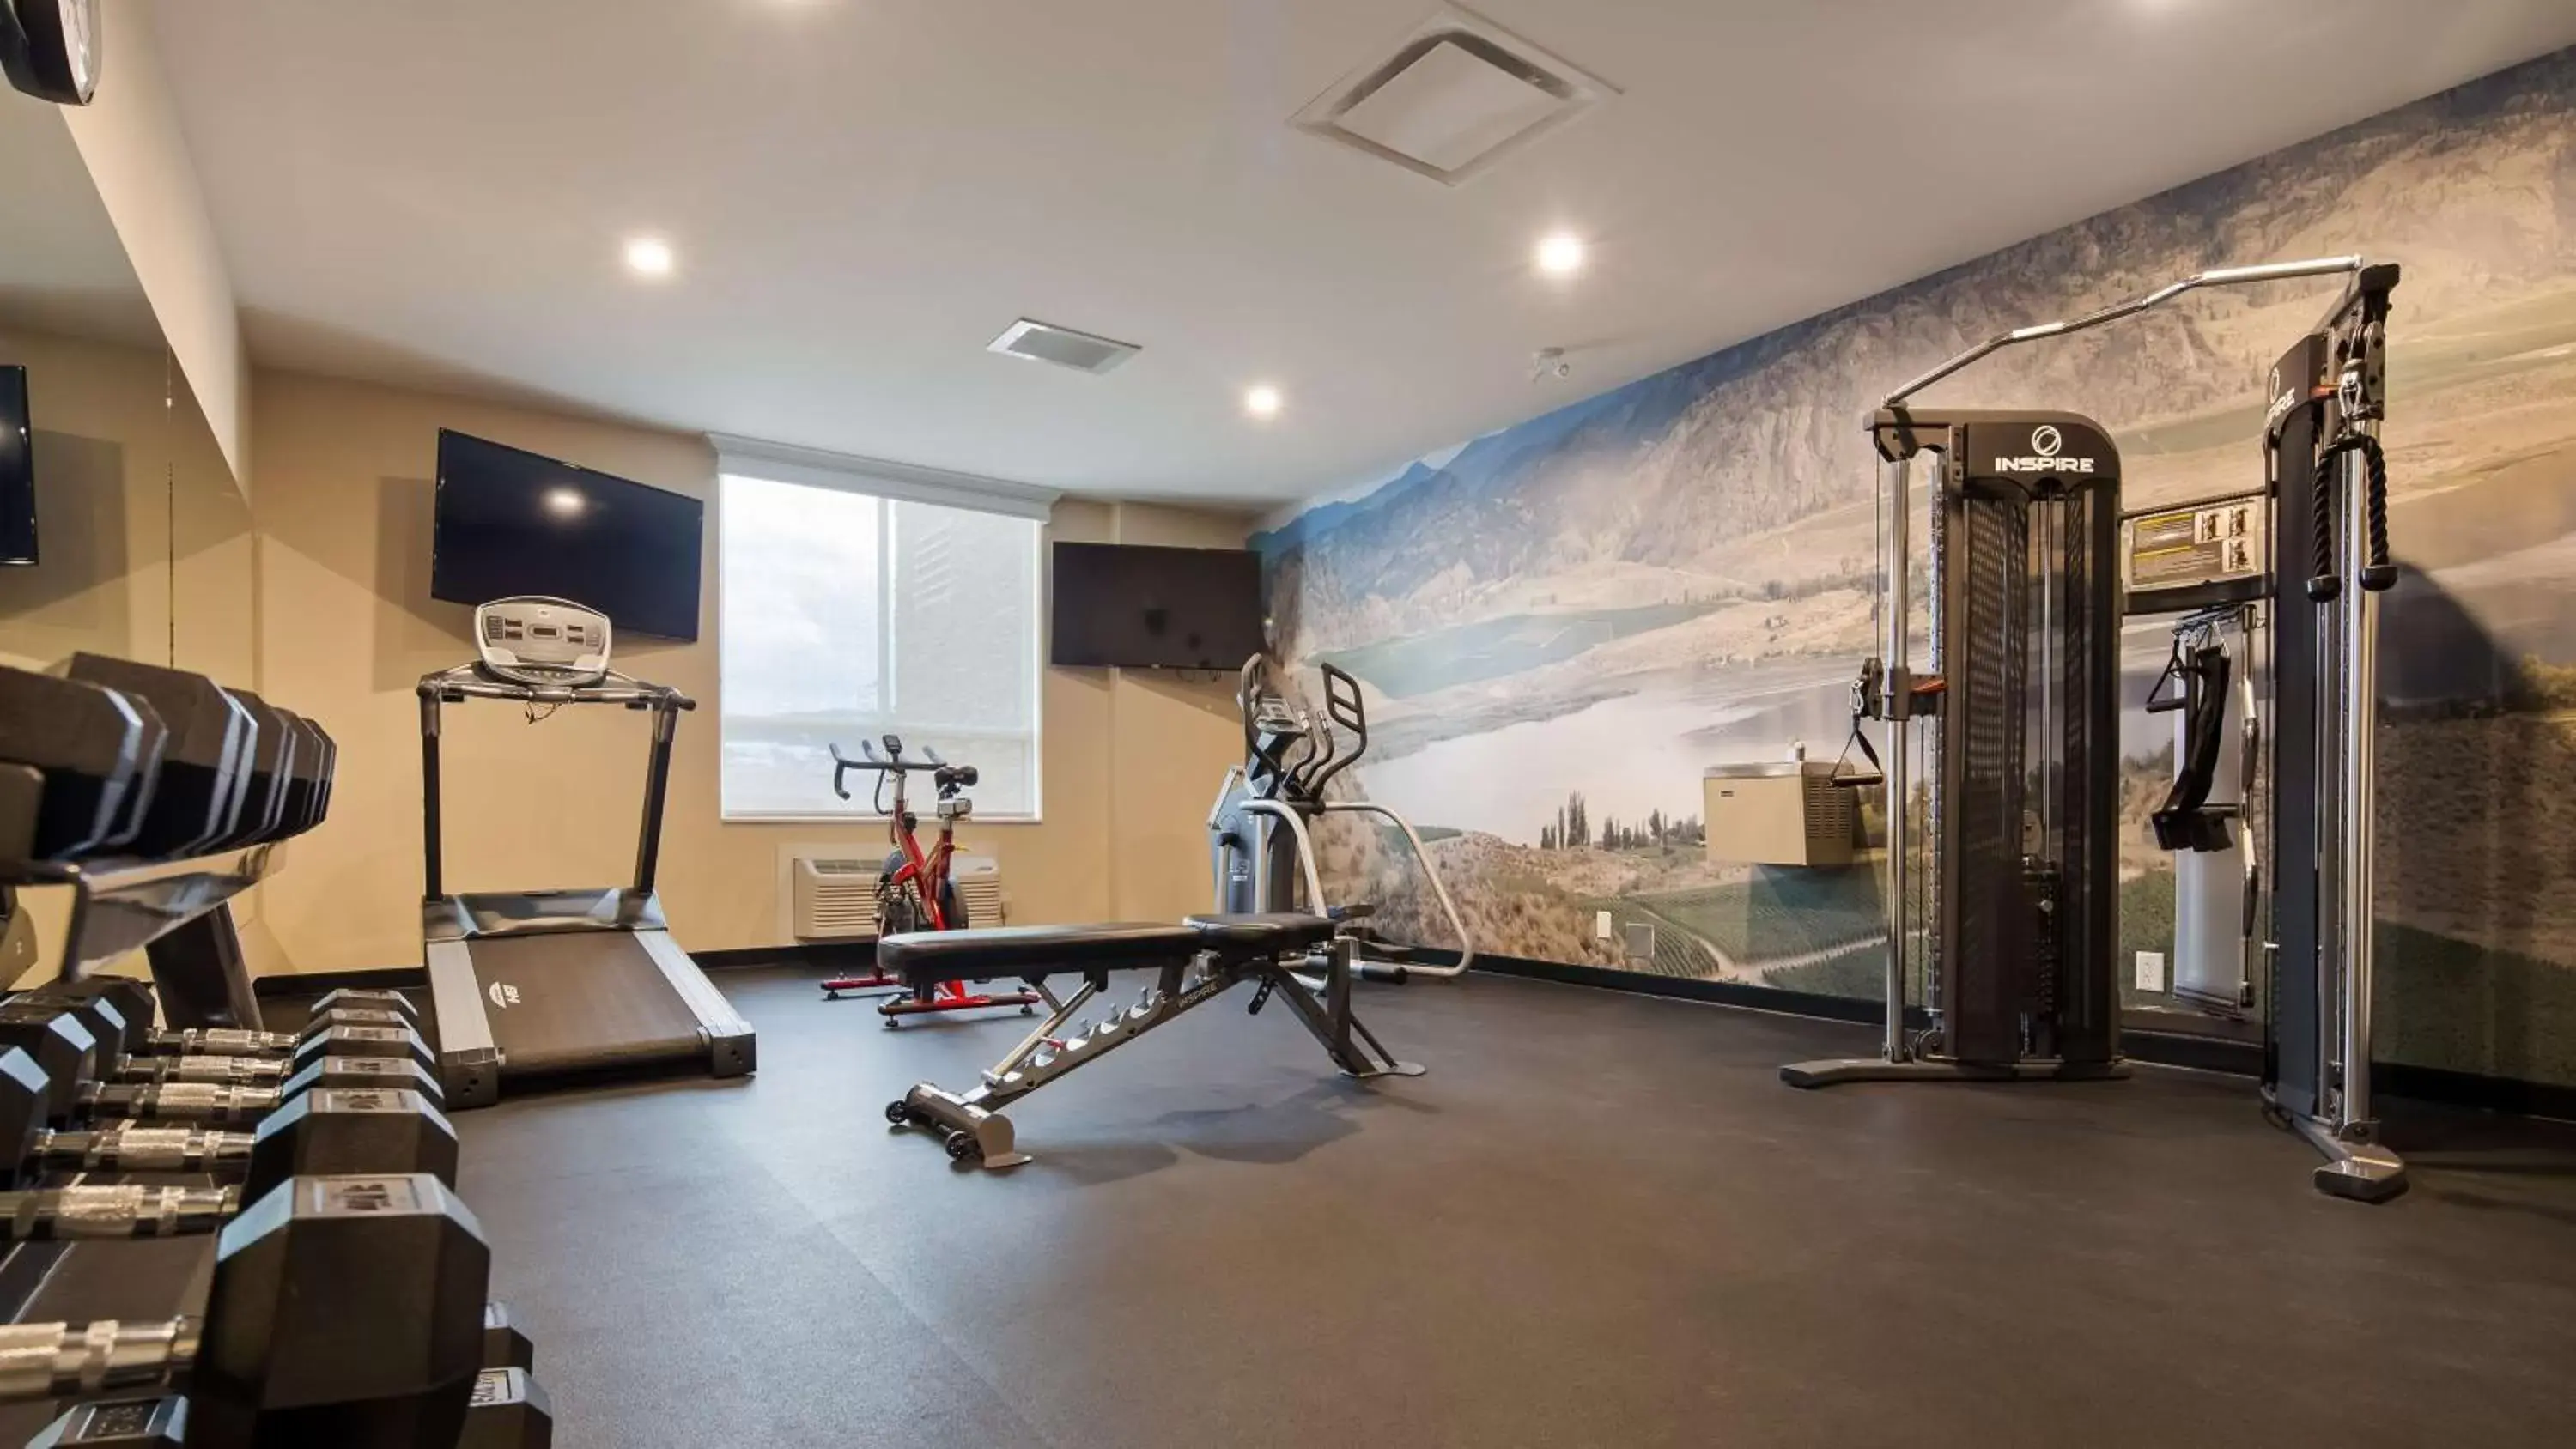 Fitness centre/facilities, Fitness Center/Facilities in Best Western Plus Merritt Hotel